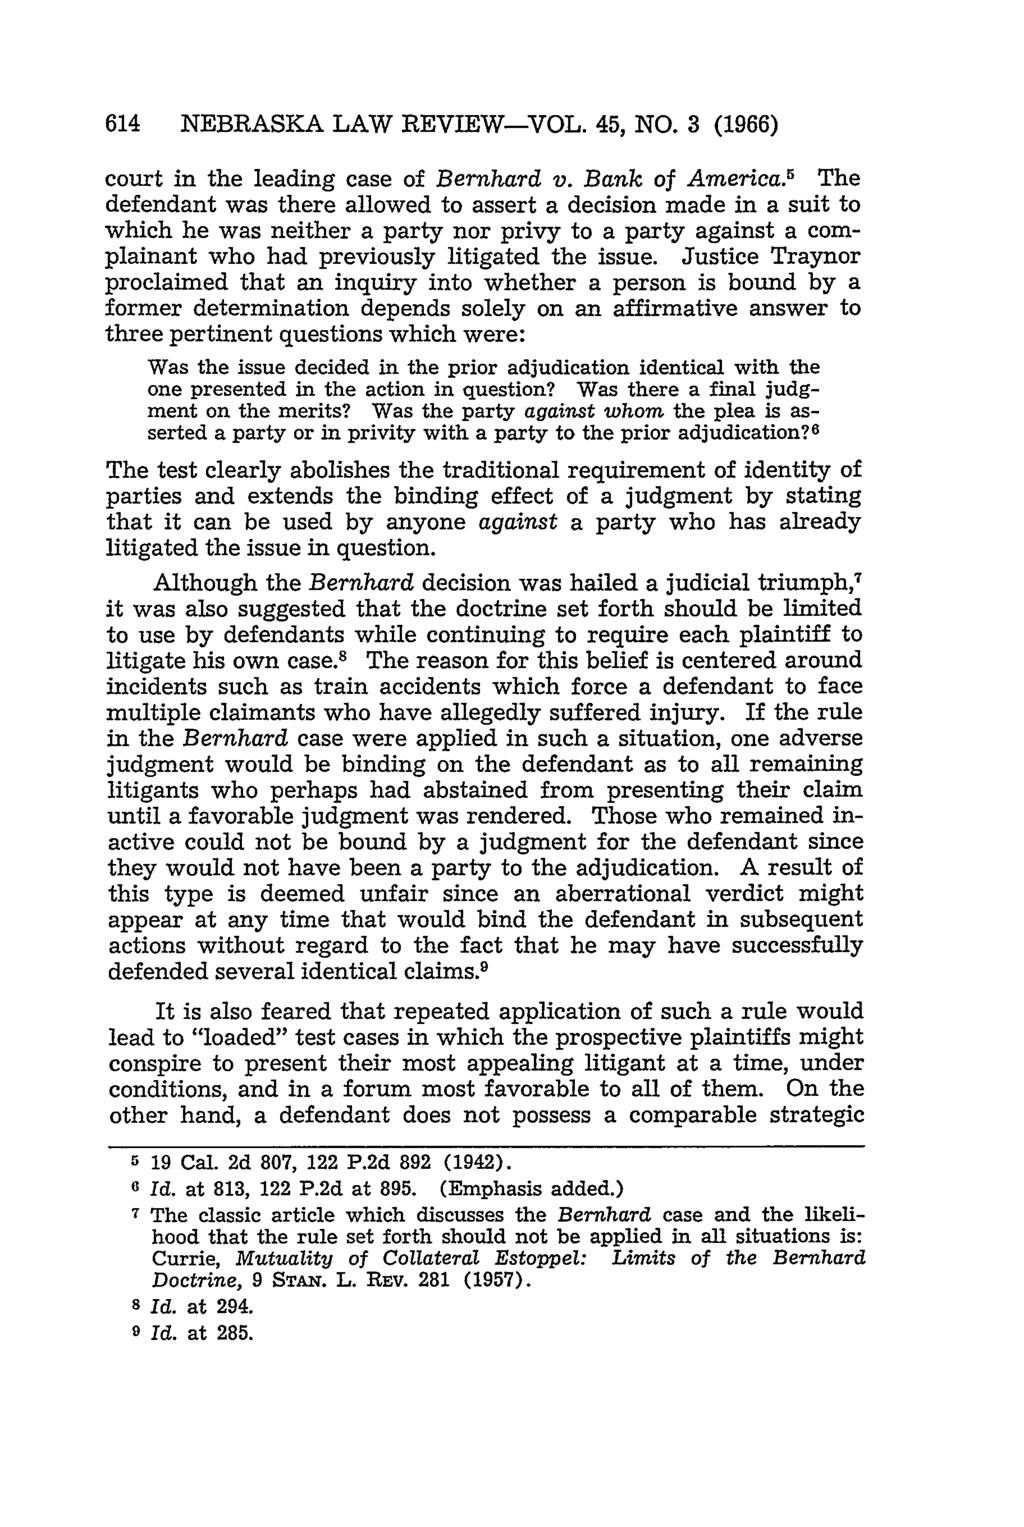 614 NEBRASKA LAW REVIEW-VOL. 45, NO. 3 (1966) court in the leading case of Bernhard v. Bank of America.